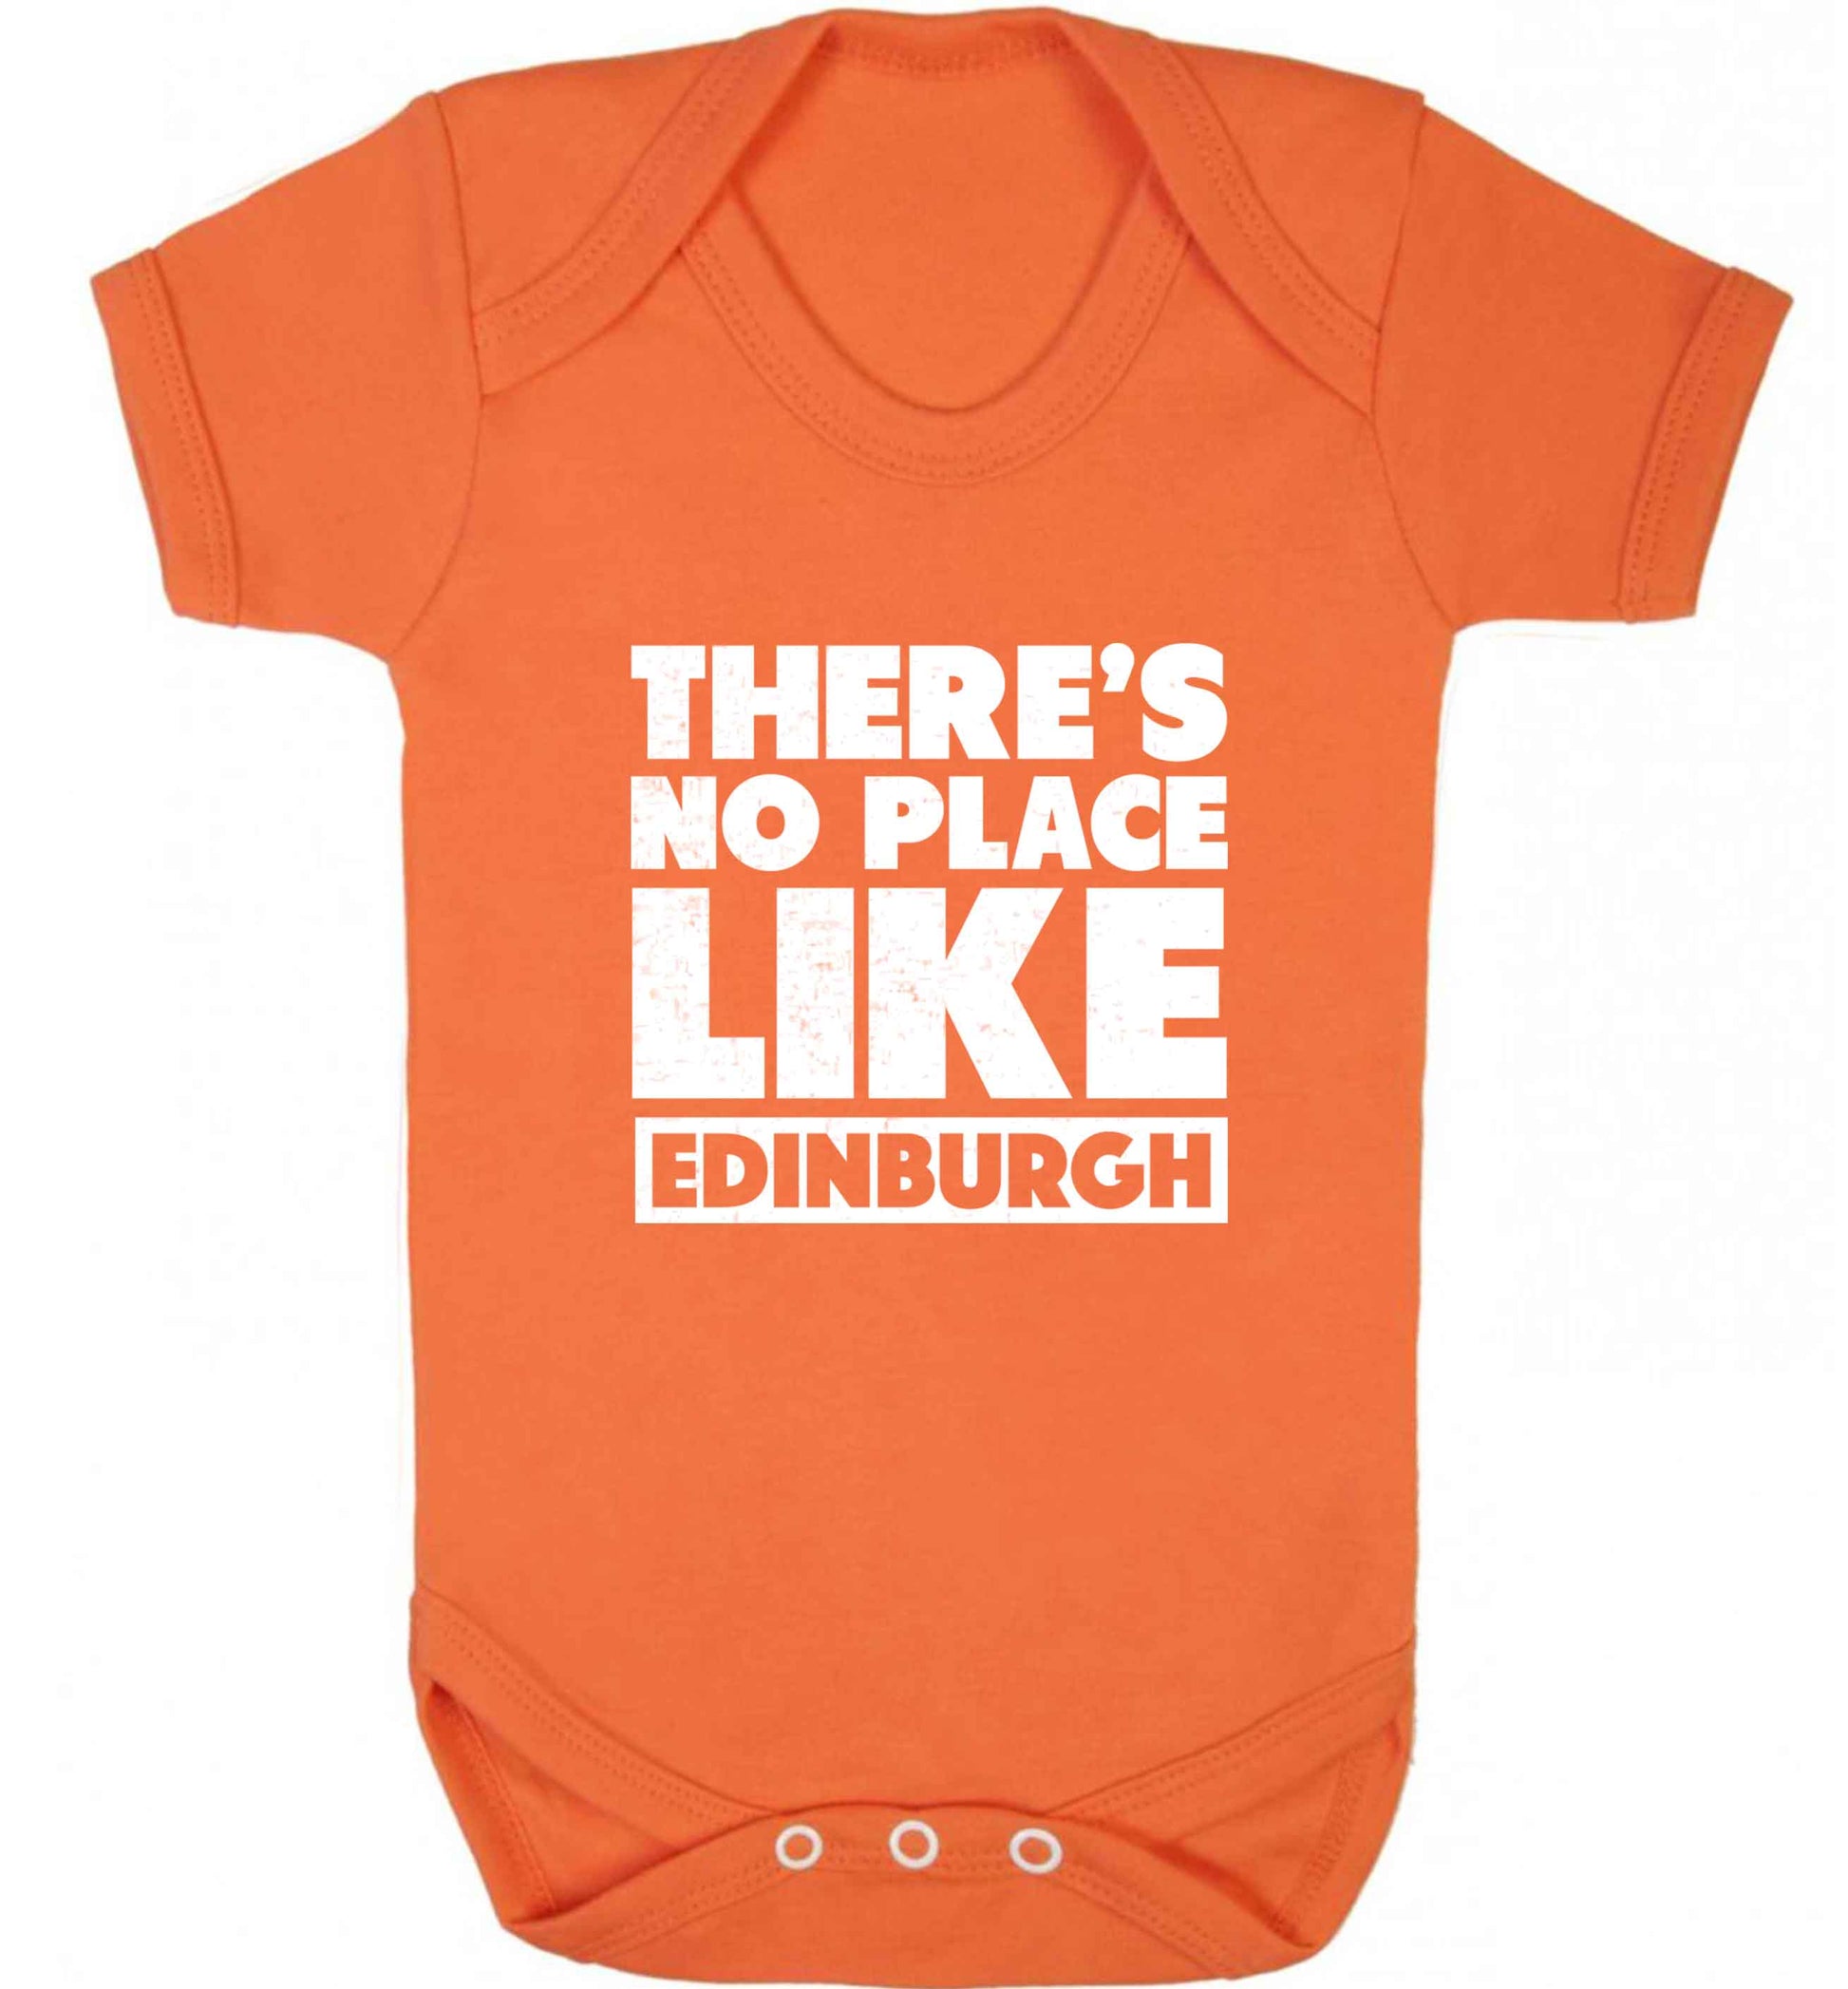 There's no place like Edinburgh baby vest orange 18-24 months